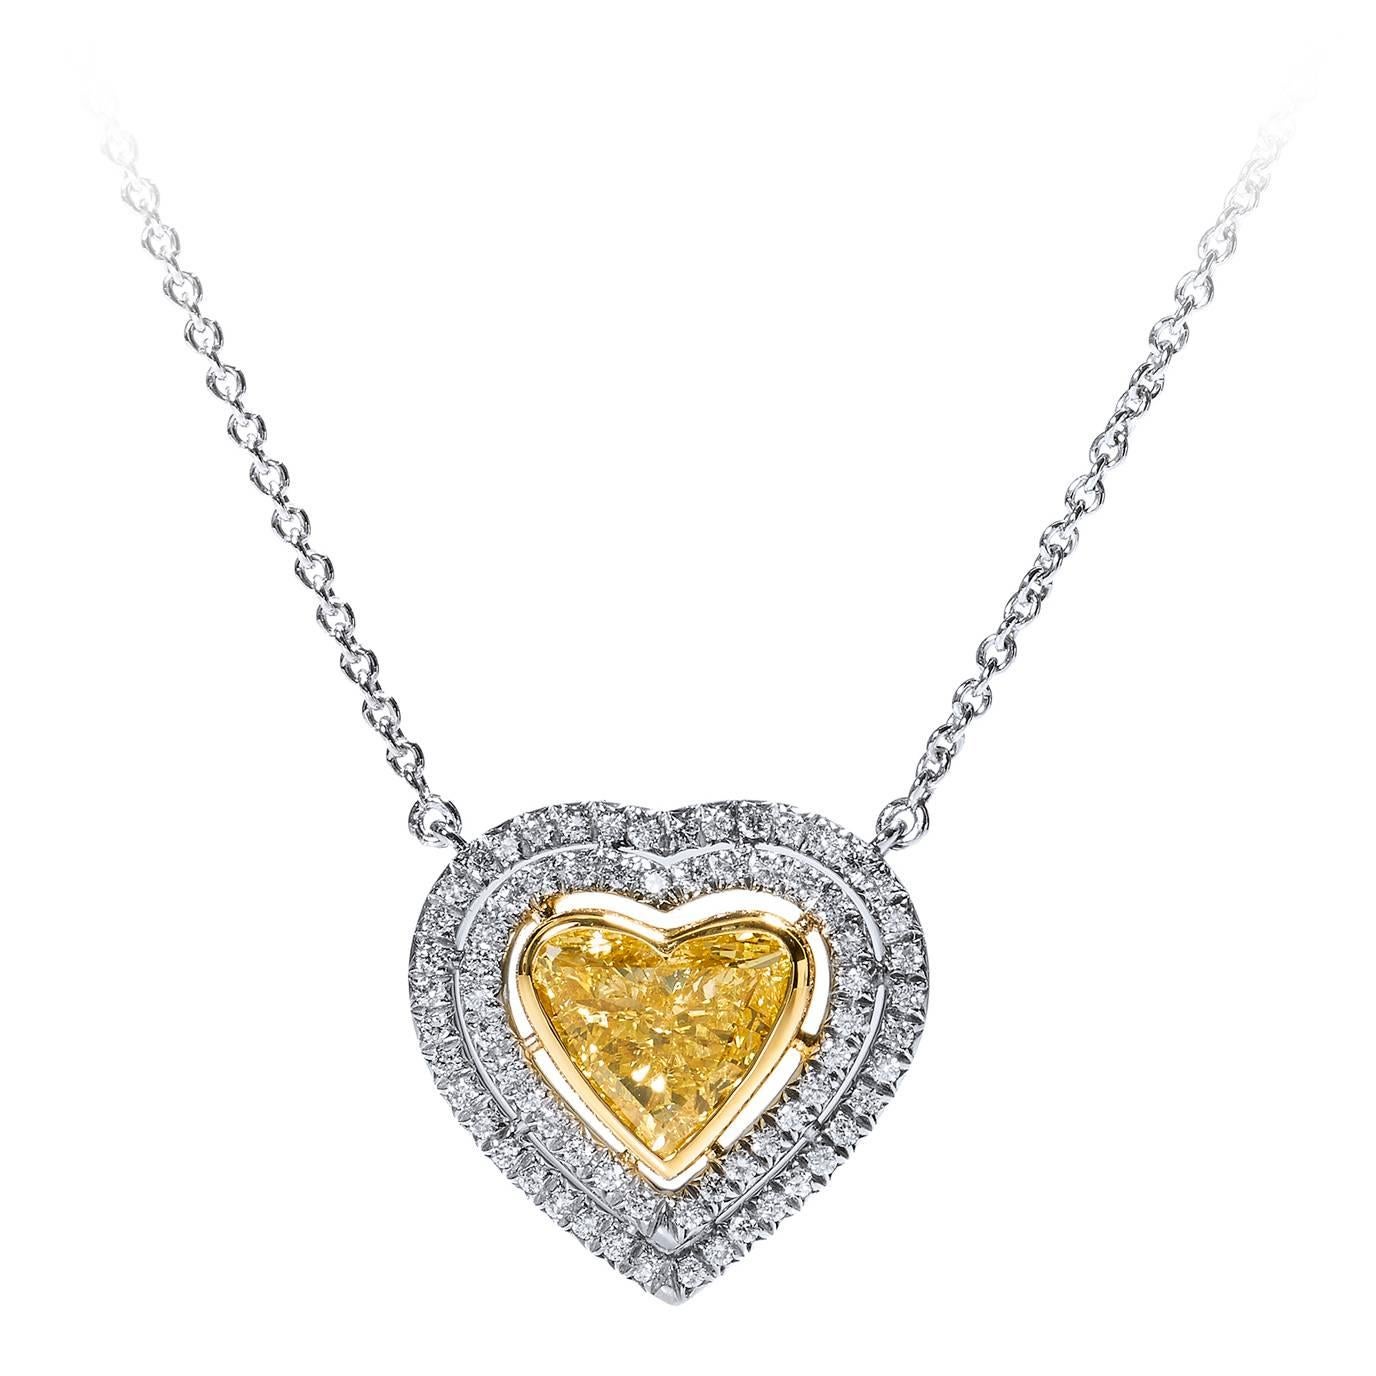 HH 1.79 Carat Natural Fancy Yellow Heart Shaped Diamond 18 Kt White Gold Pendant